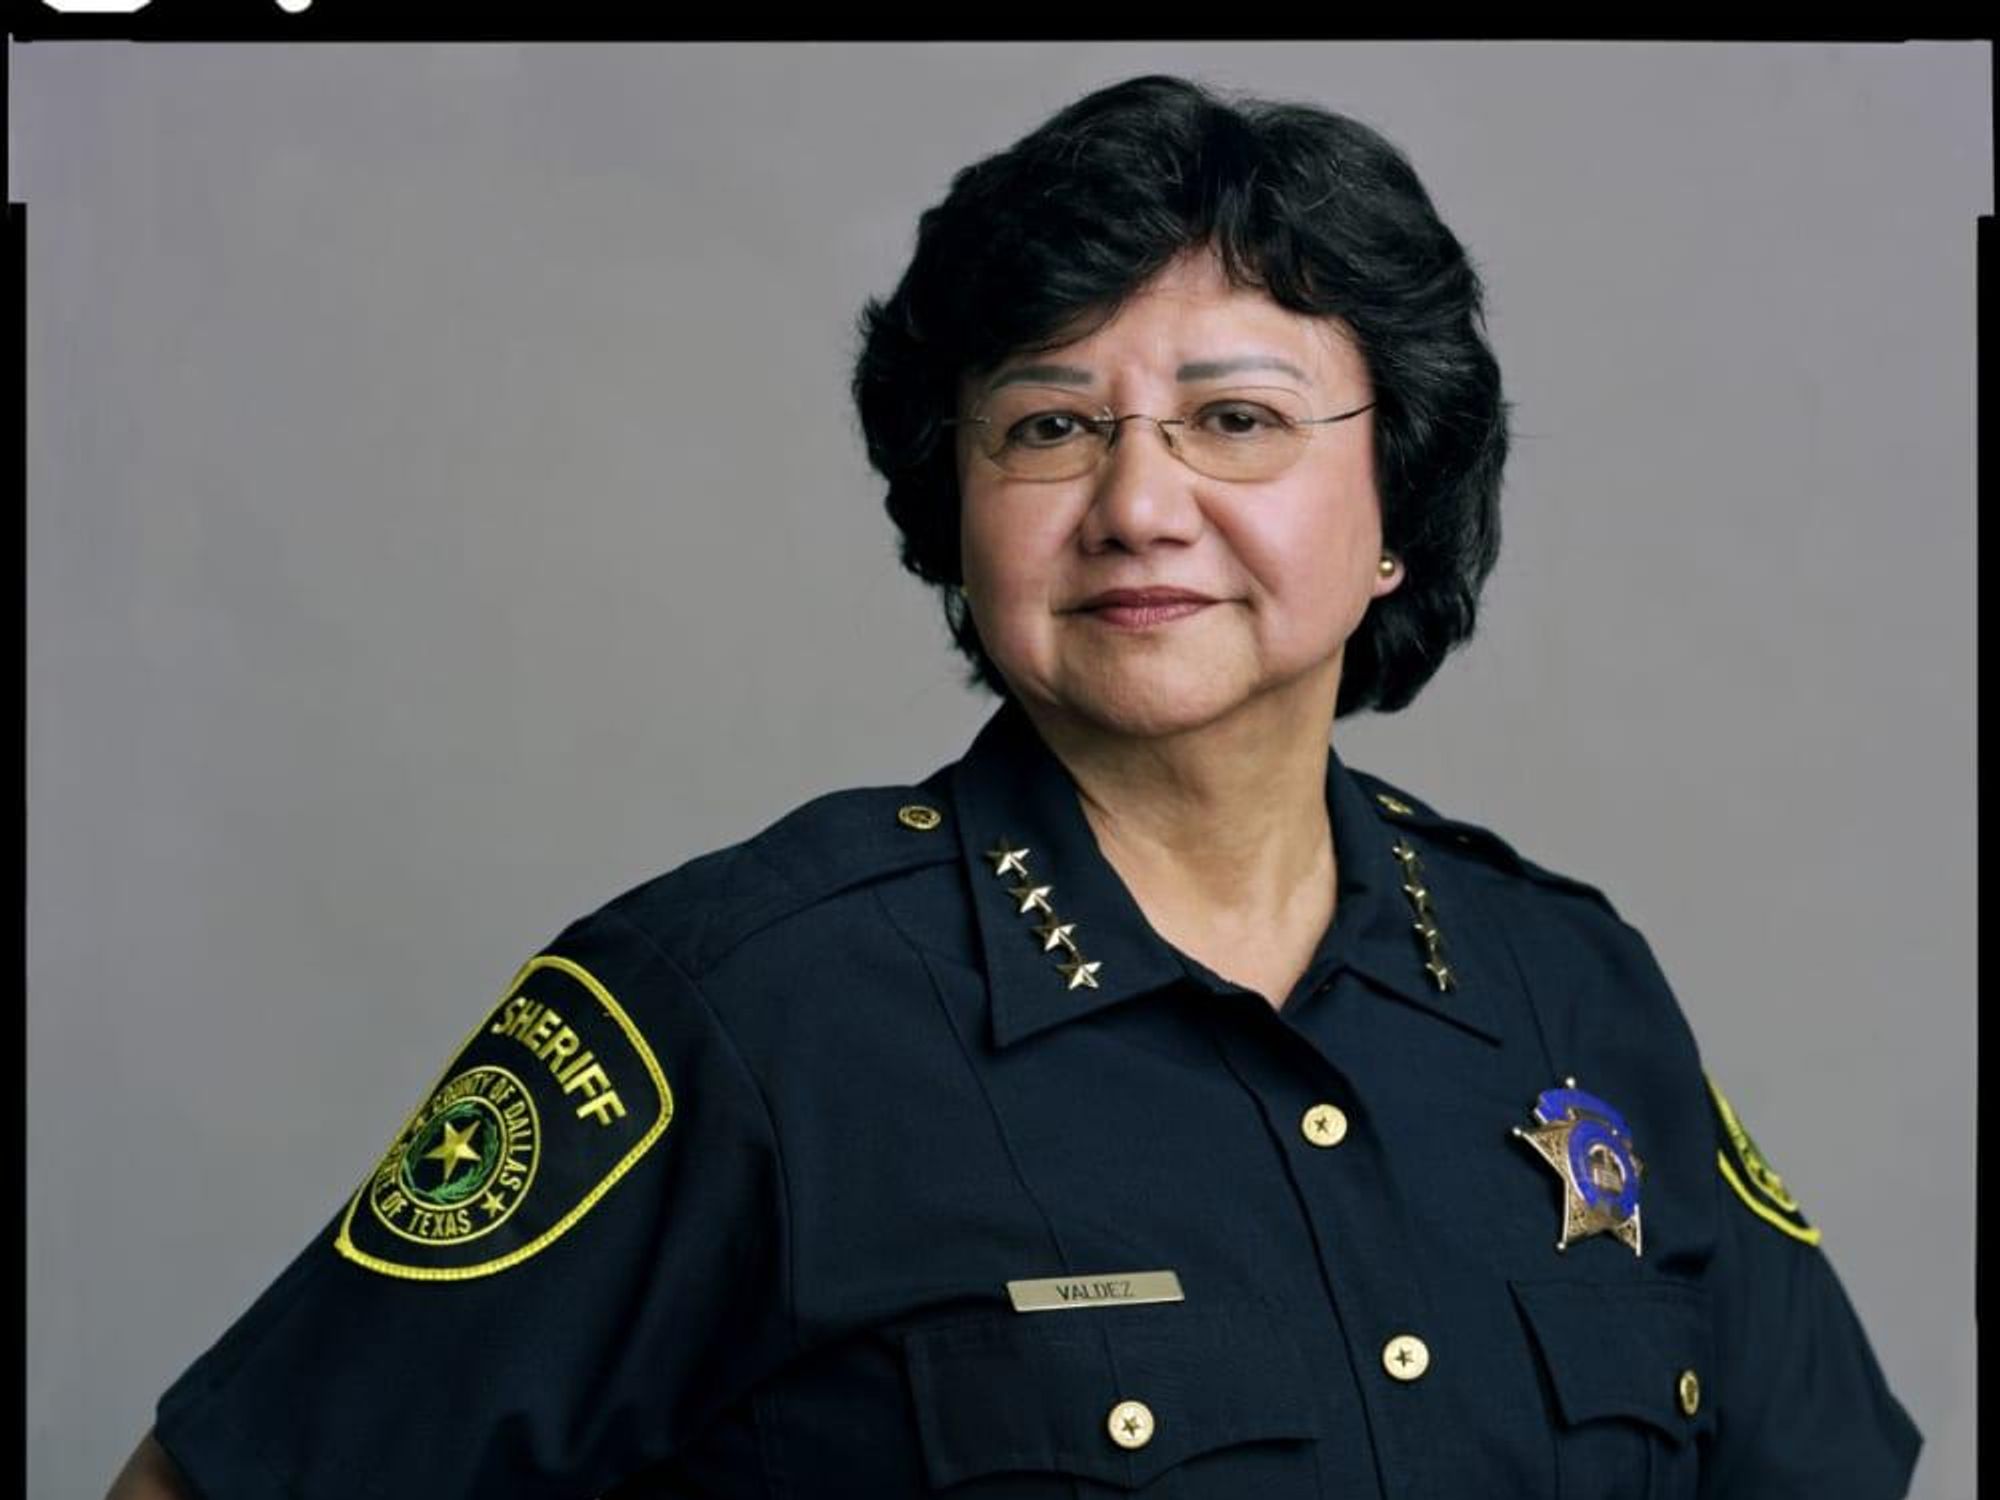 Dallas County Sheriff Lupe Valdez